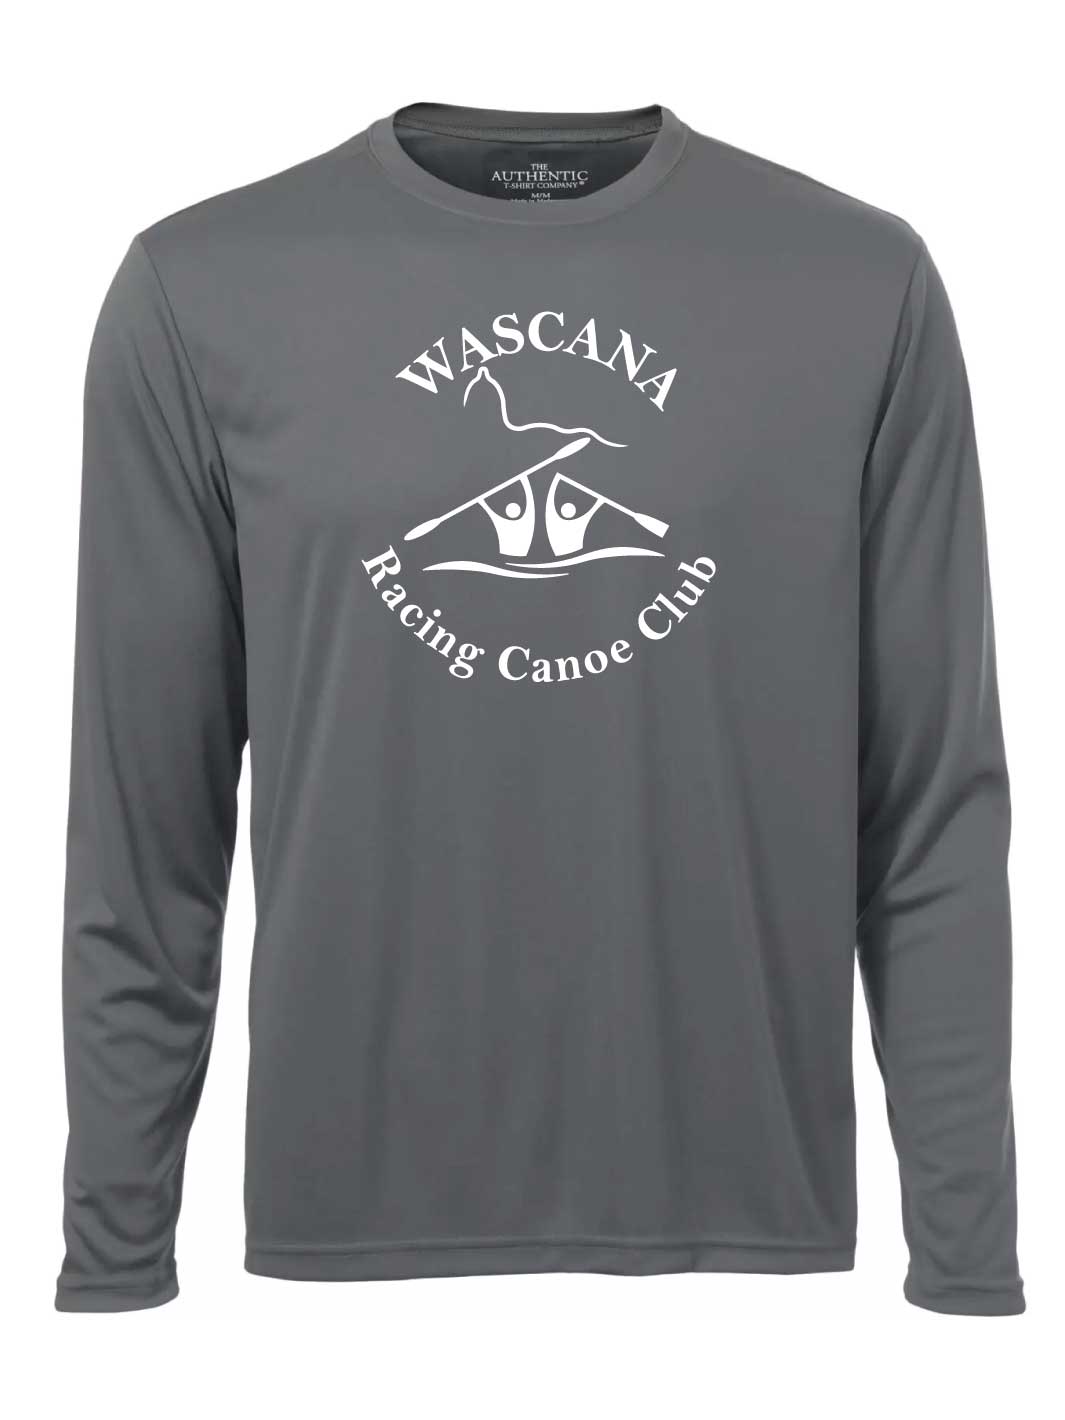 Wascana Dry Fit Long Sleeve T-shirt - Oddball Workshop